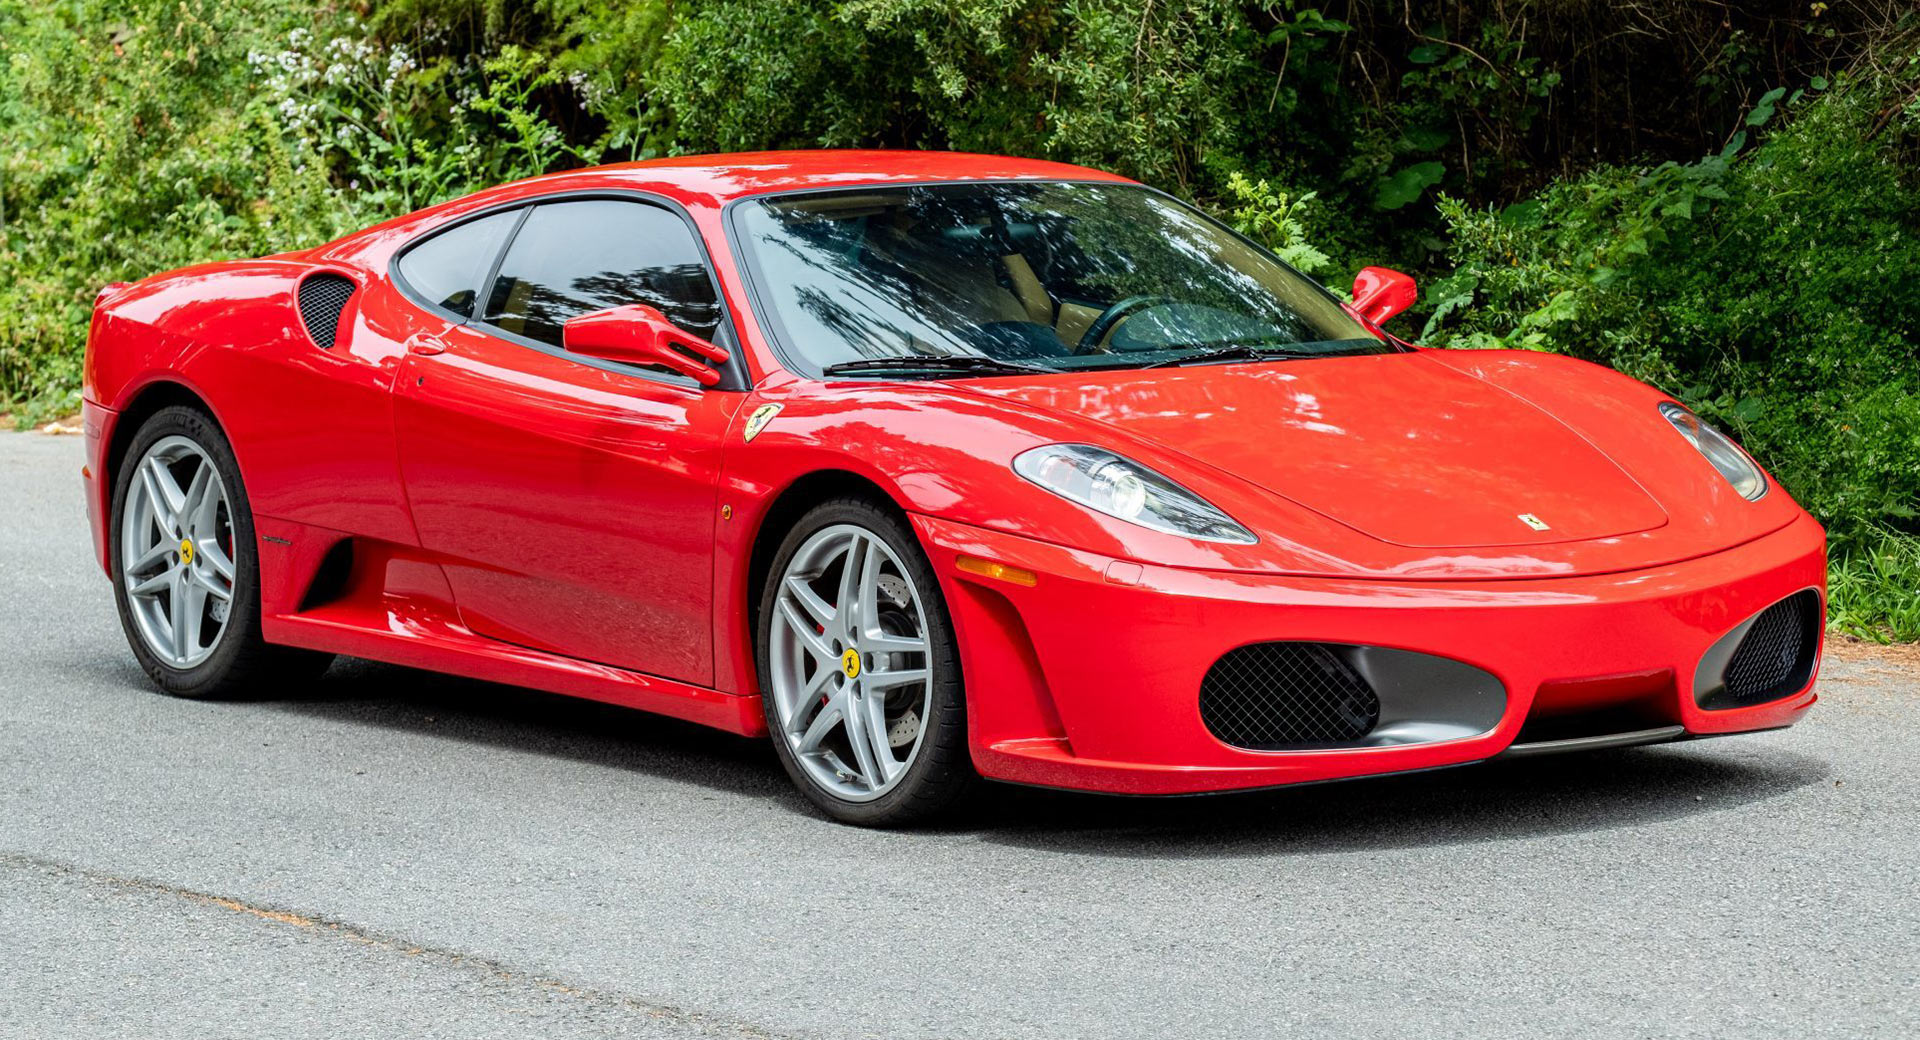 Ferrari F430 With SixSpeed Manual Is A True Petrolhead's Supercar